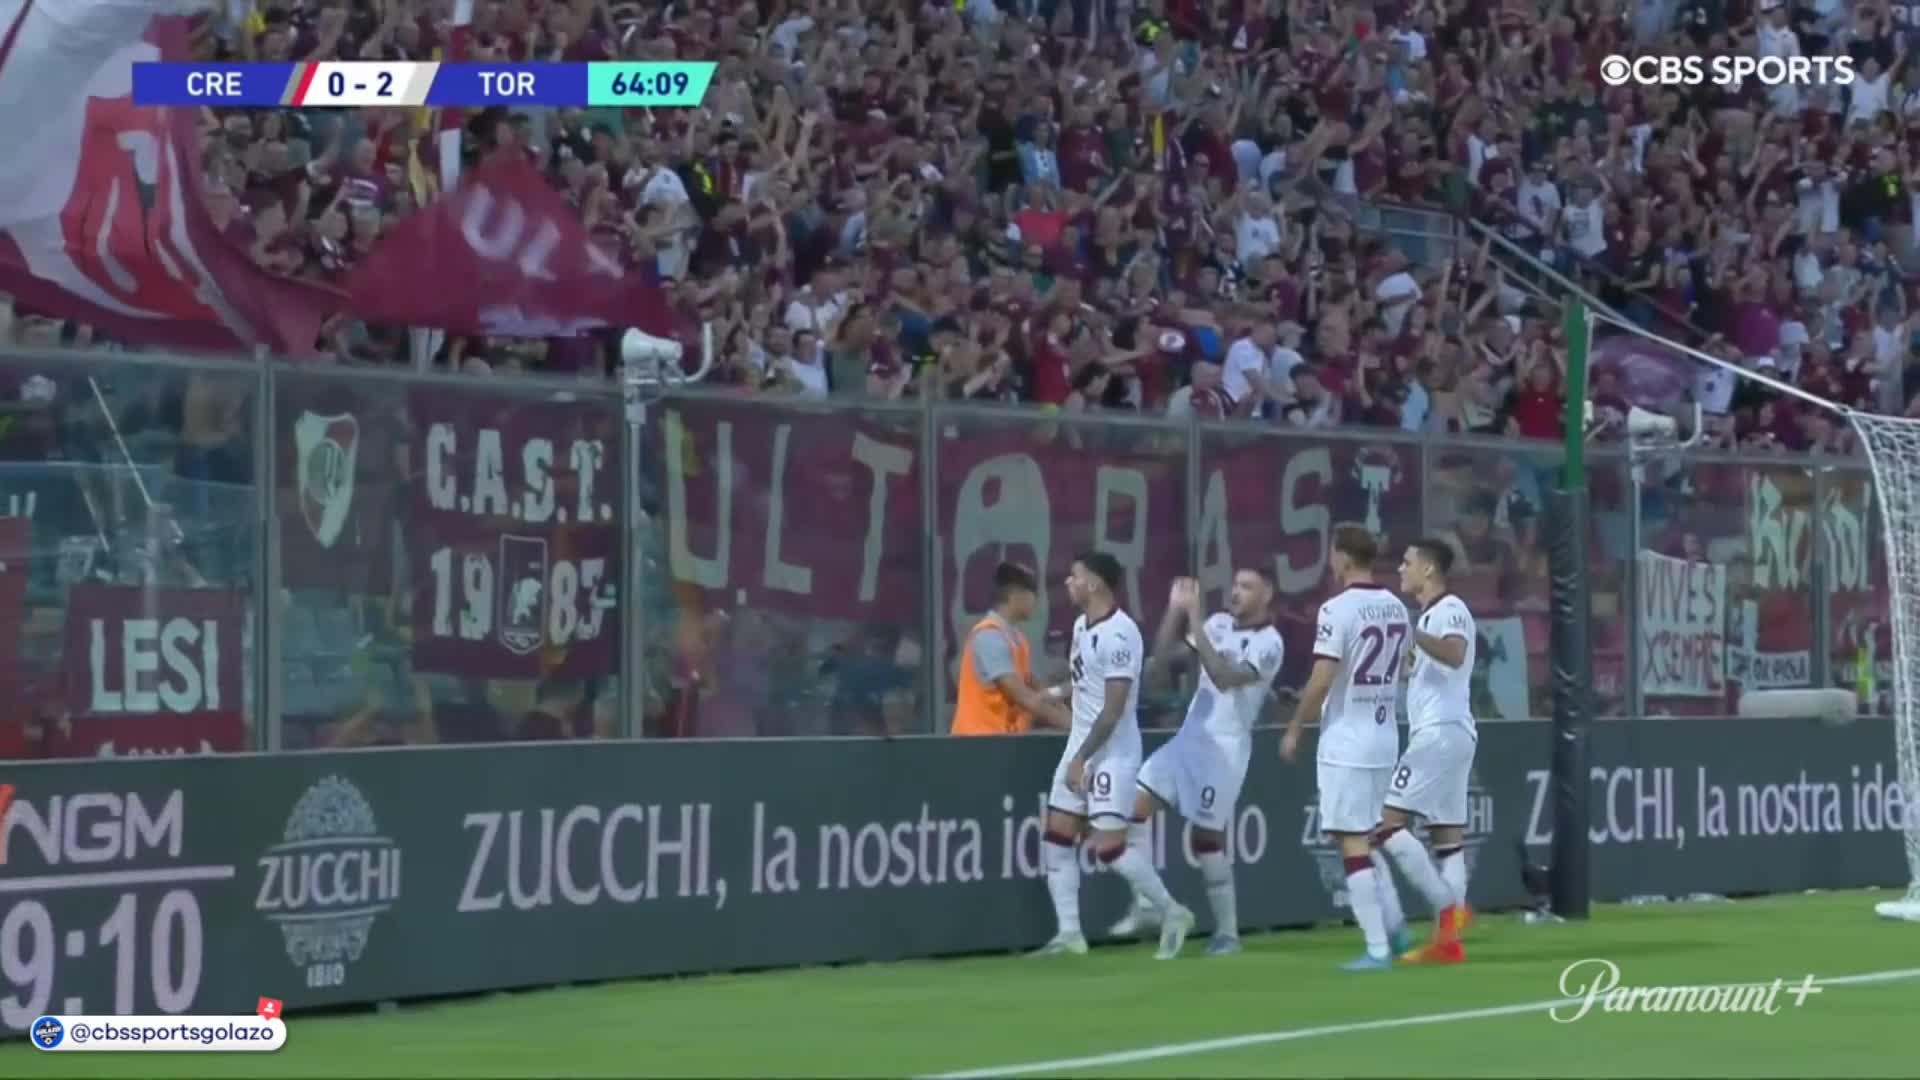 Nemanja Radonjić gets his first Serie A goal 👏”